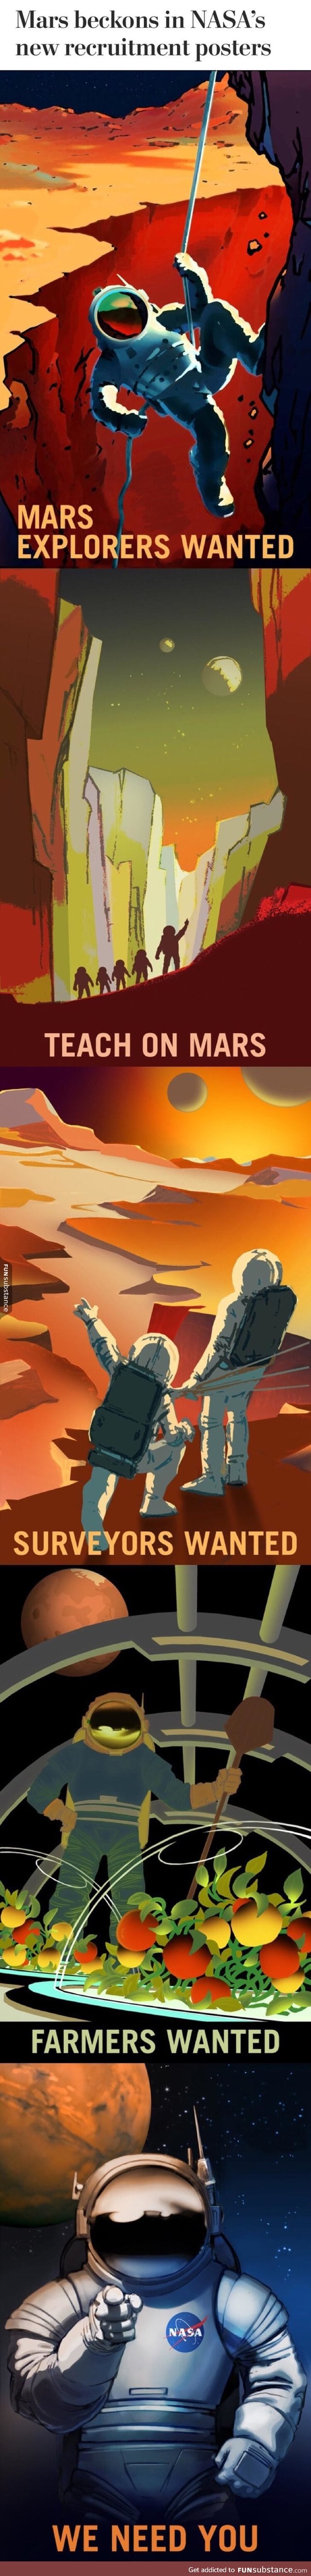 NASA's Mars recruitment posters